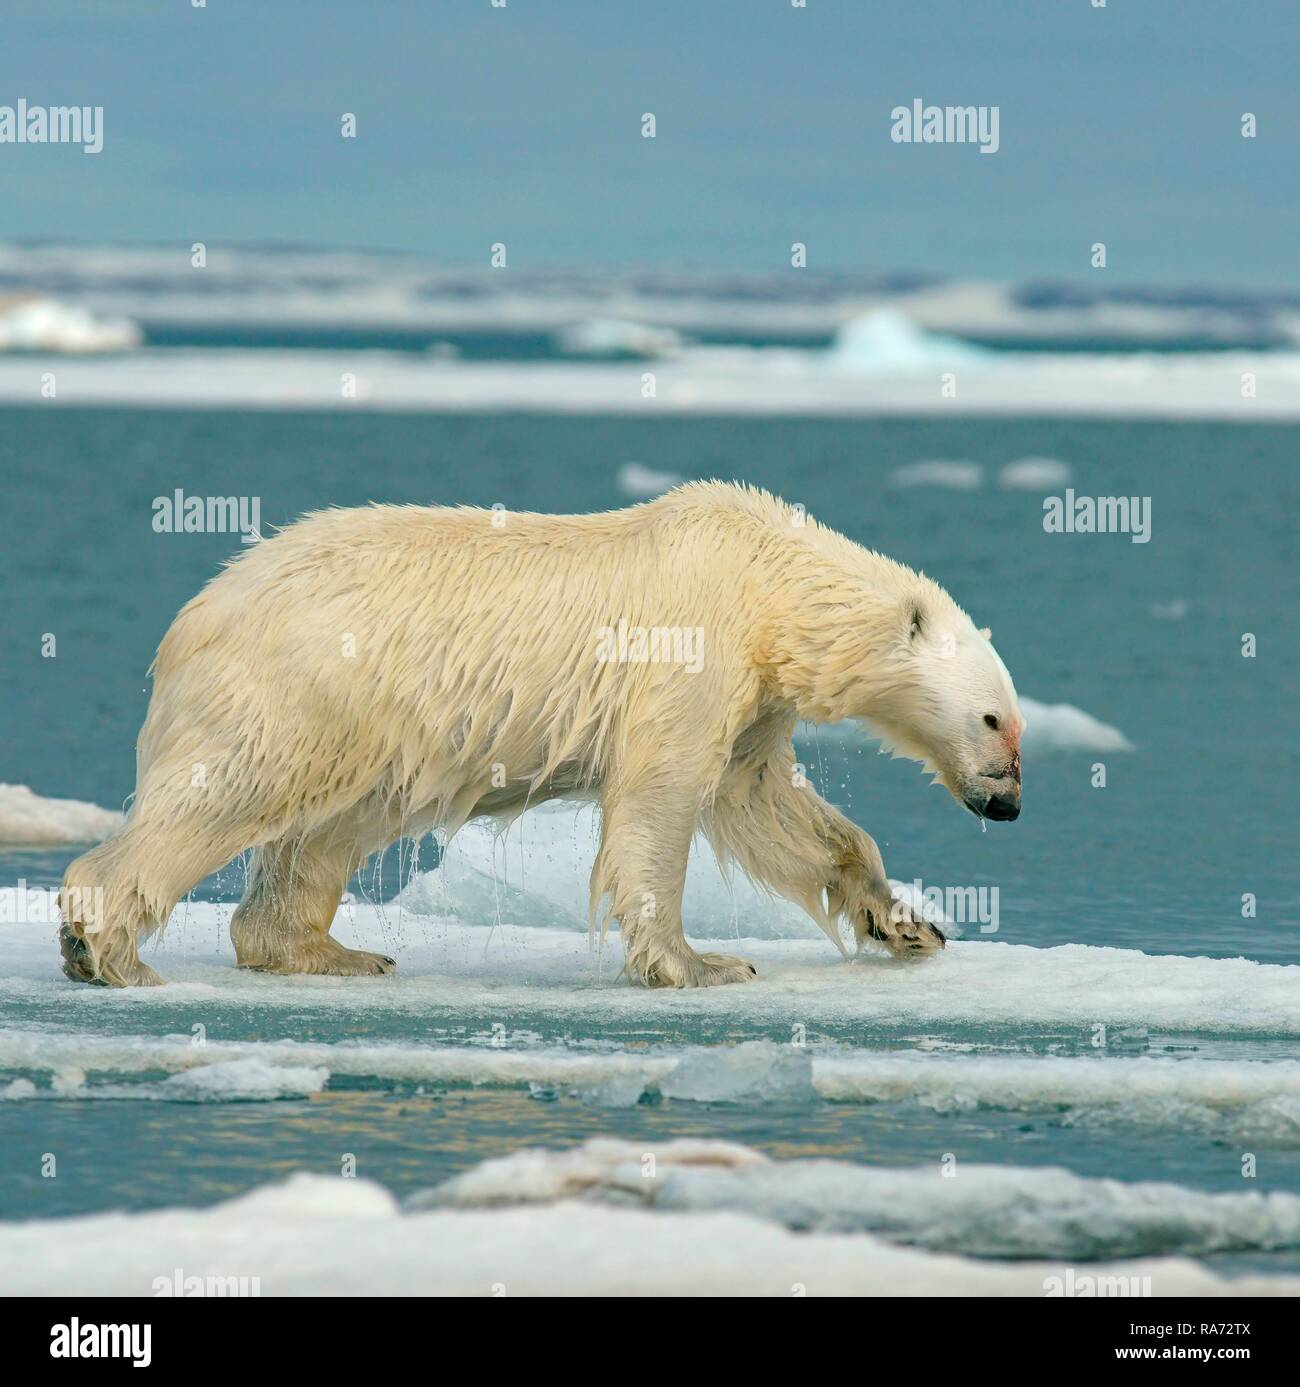 Polar bear (Ursus maritimus) runs on ice floe, water drips from wet fur, Svalbard, Norwegian Arctic, Norway Stock Photo